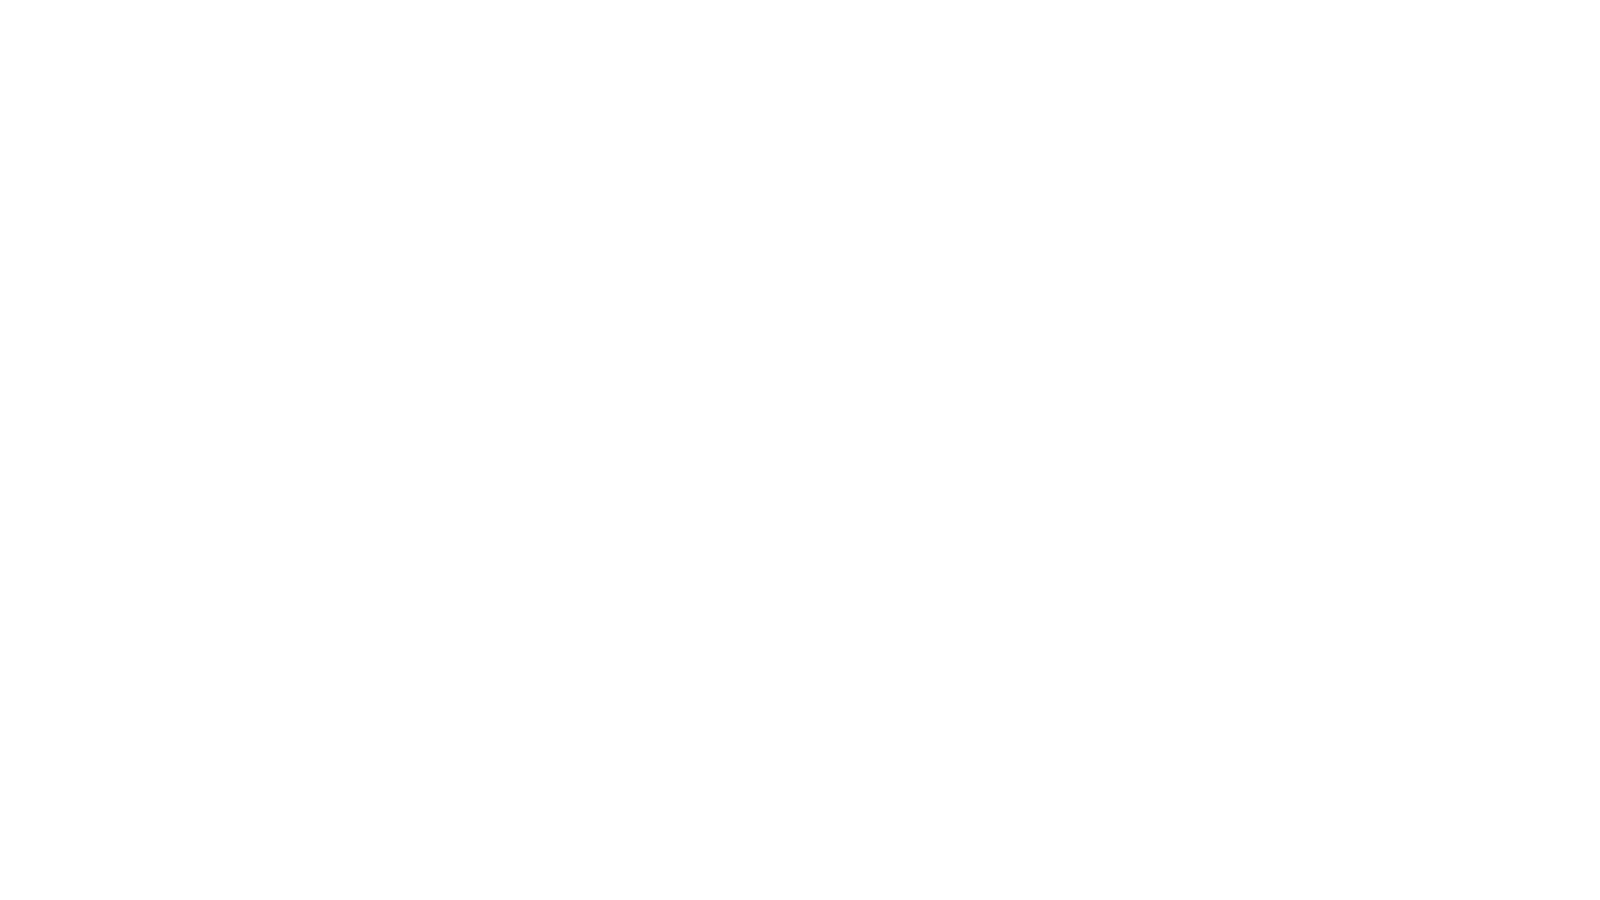 Sravis branding case study: Typographic logo design